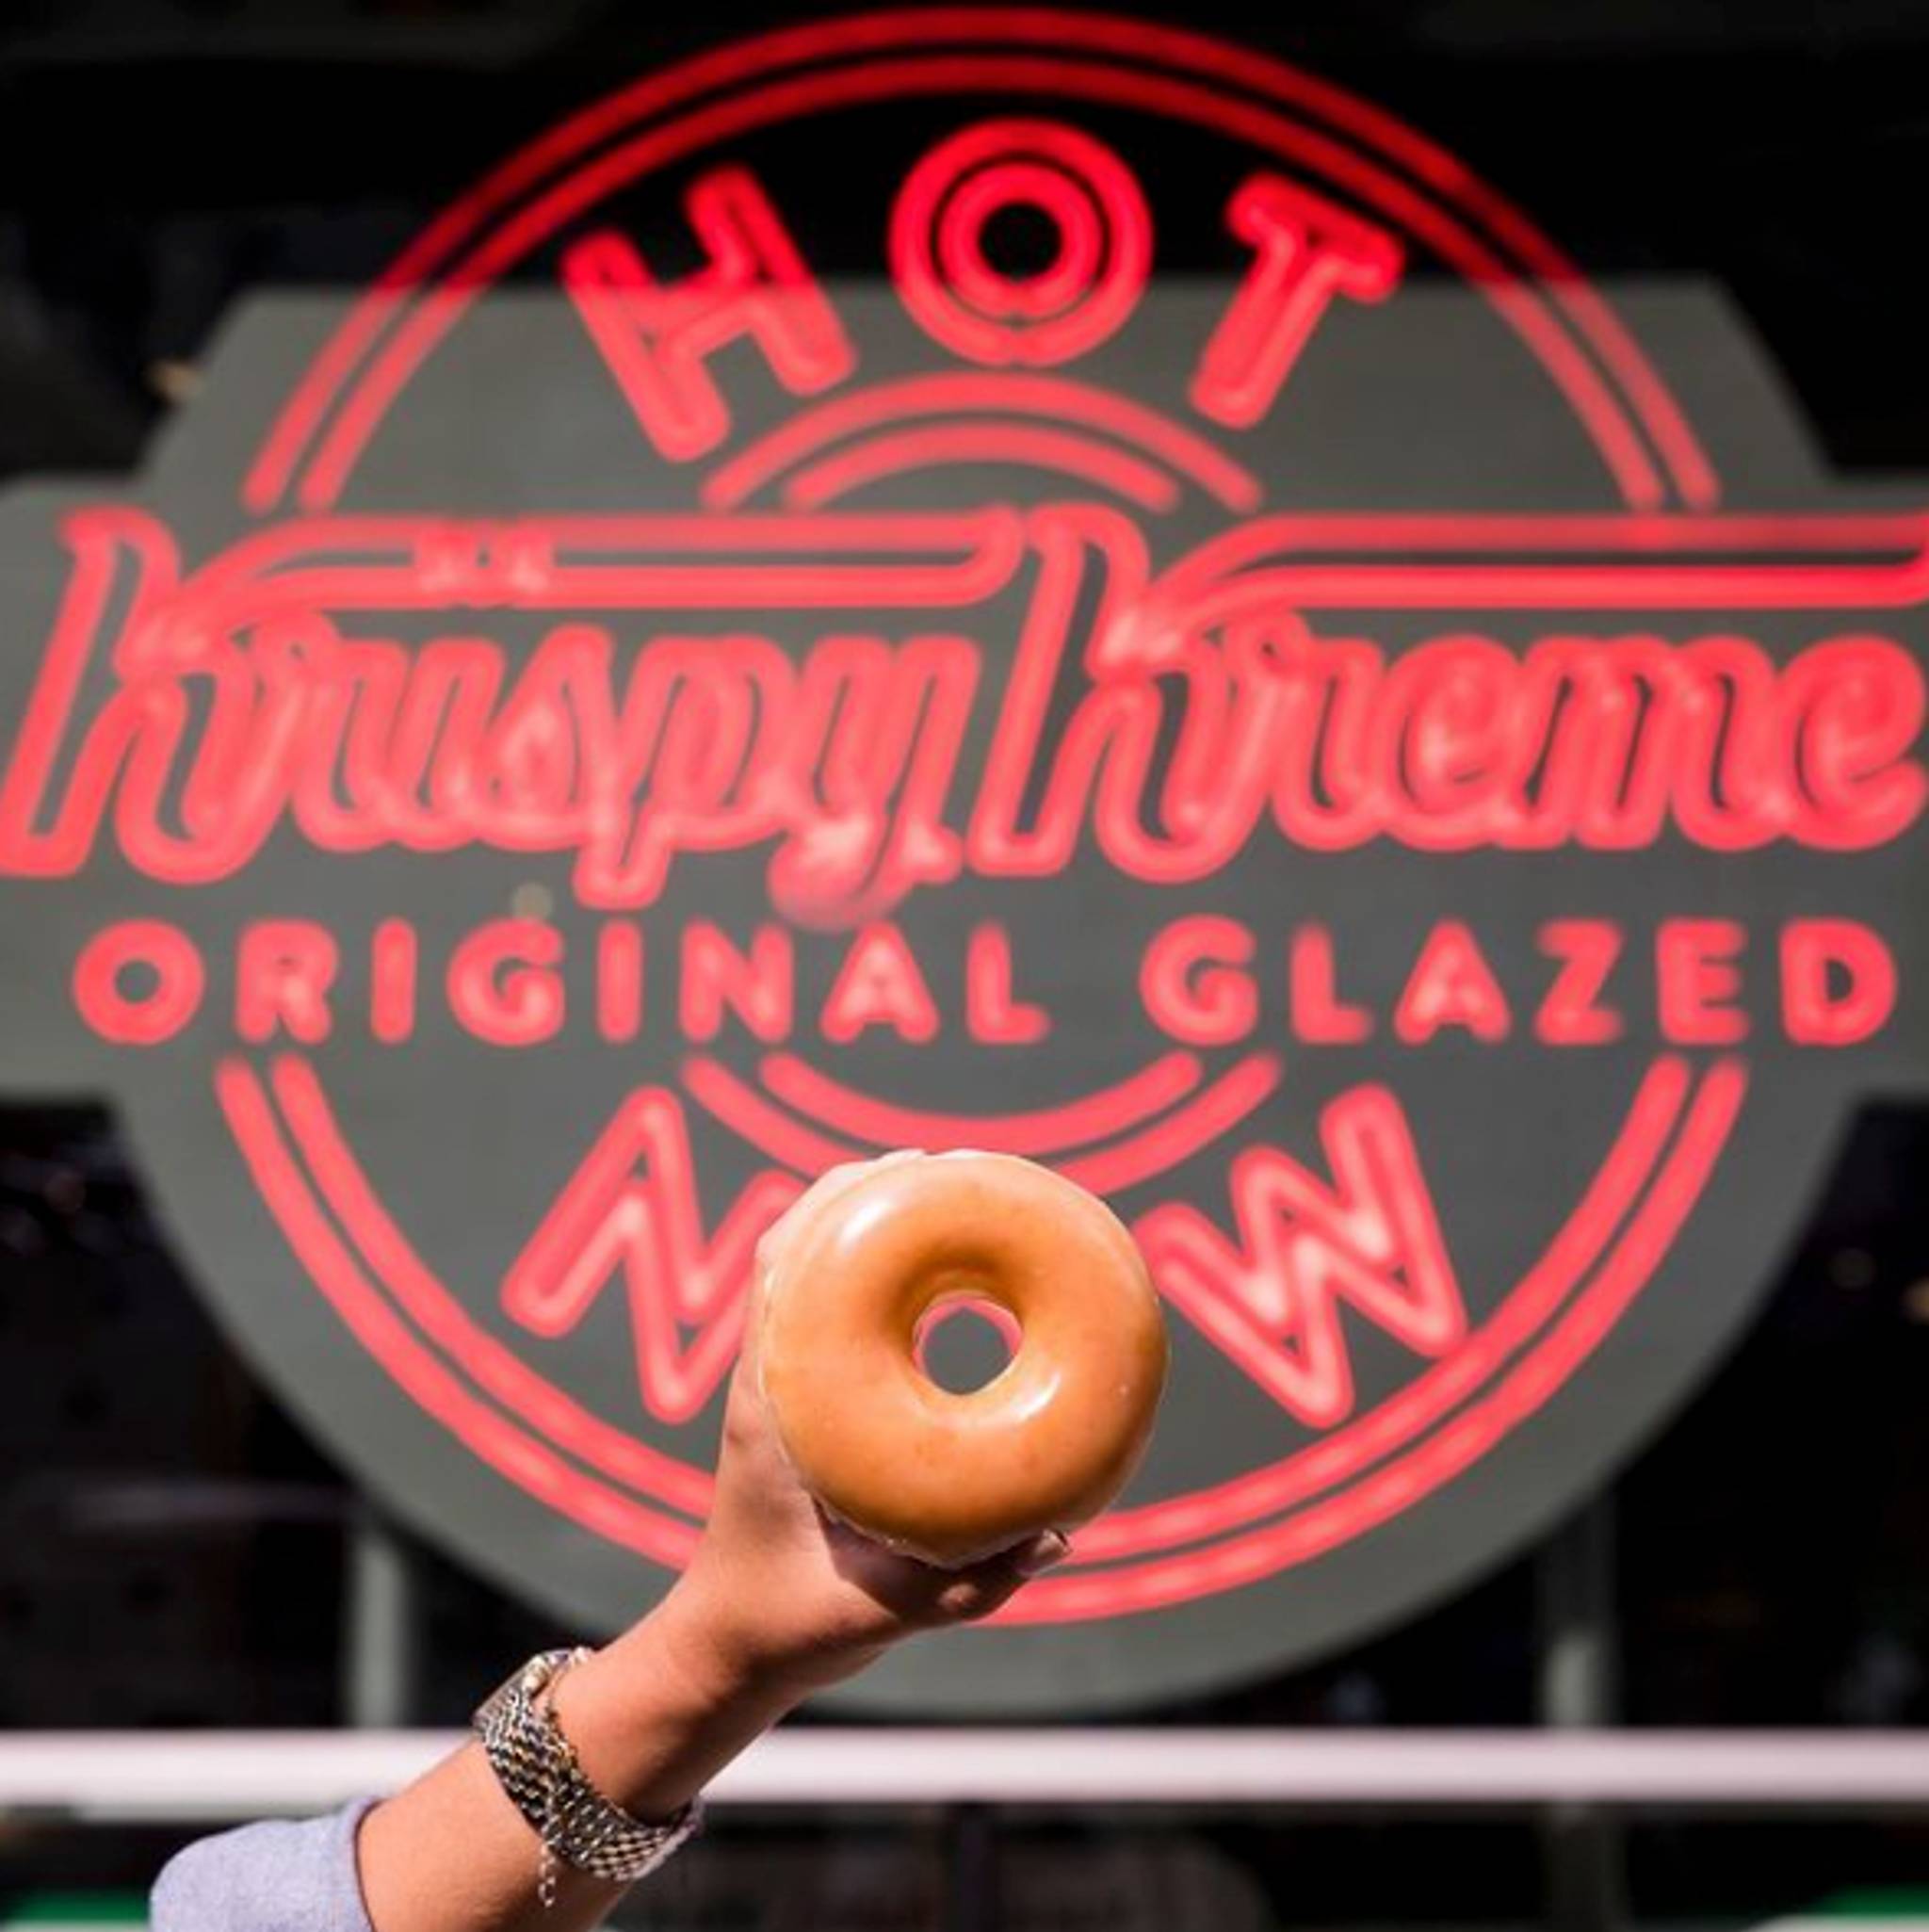 Krispy Kreme giveaway makes vaccination more tempting